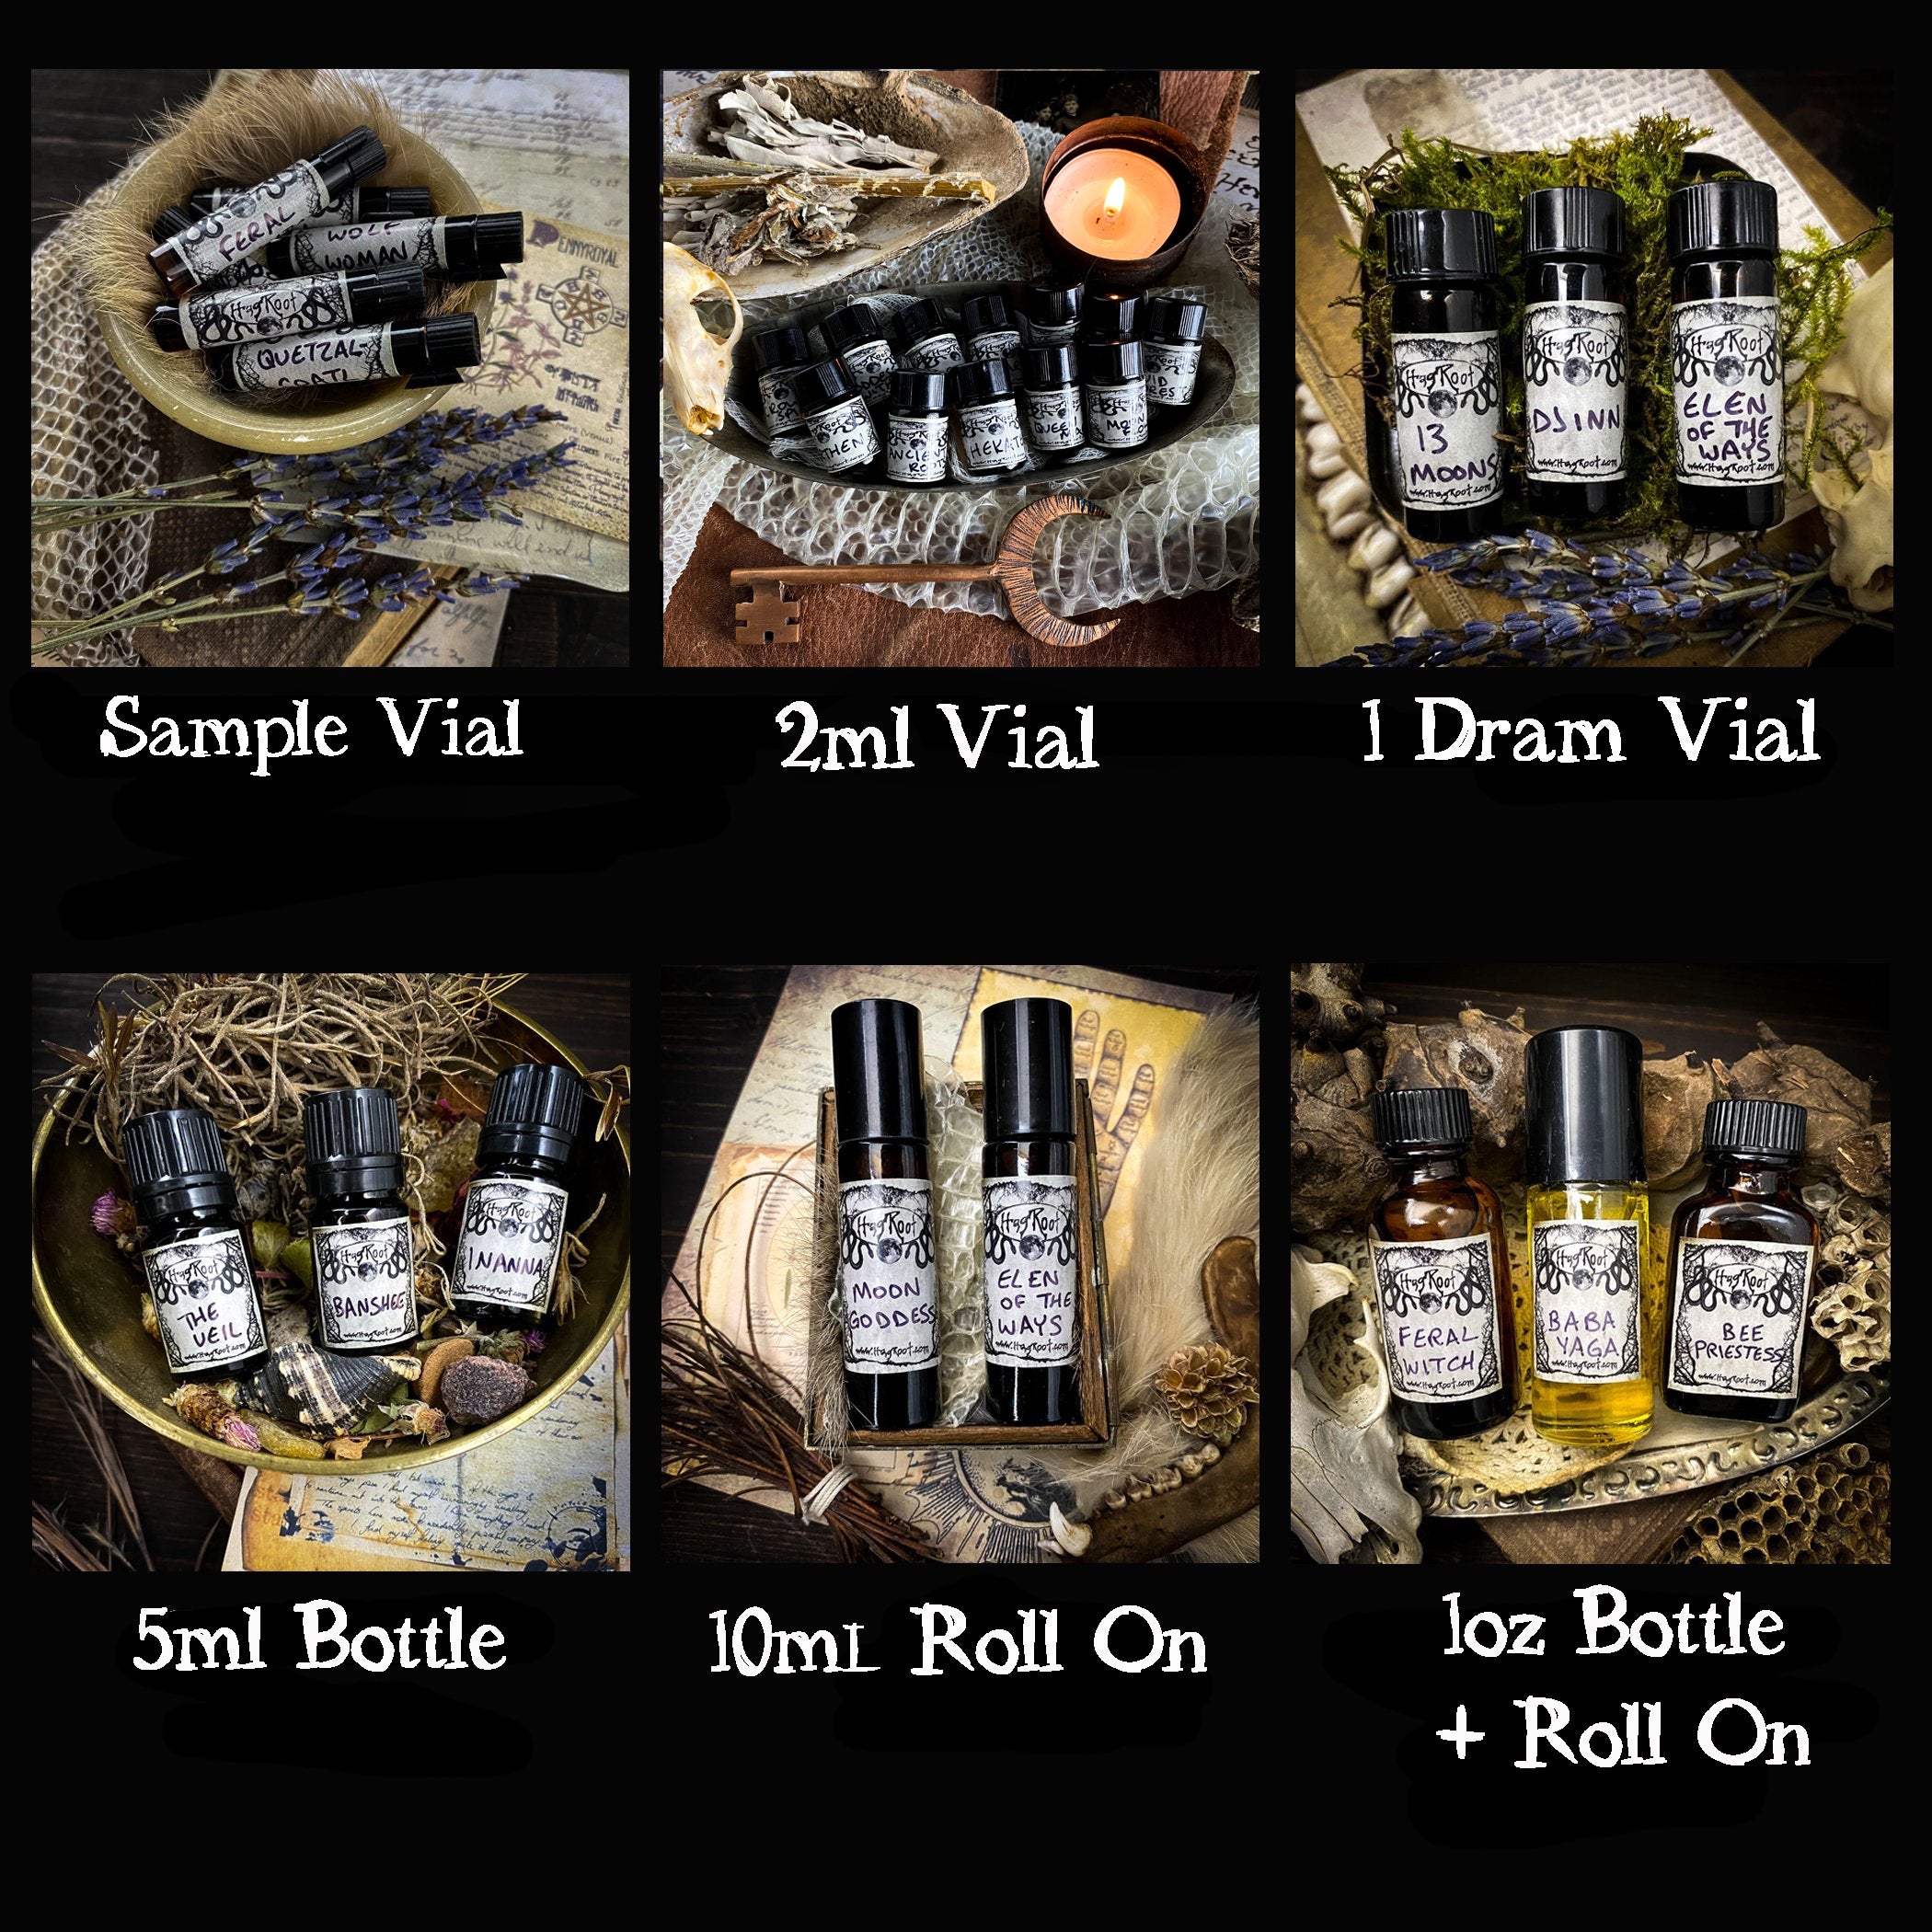 EPONA-(Hay, Vanilla, Labdanum, Sweetgrass)-Perfume, Cologne, Anointing, Ritual Oil